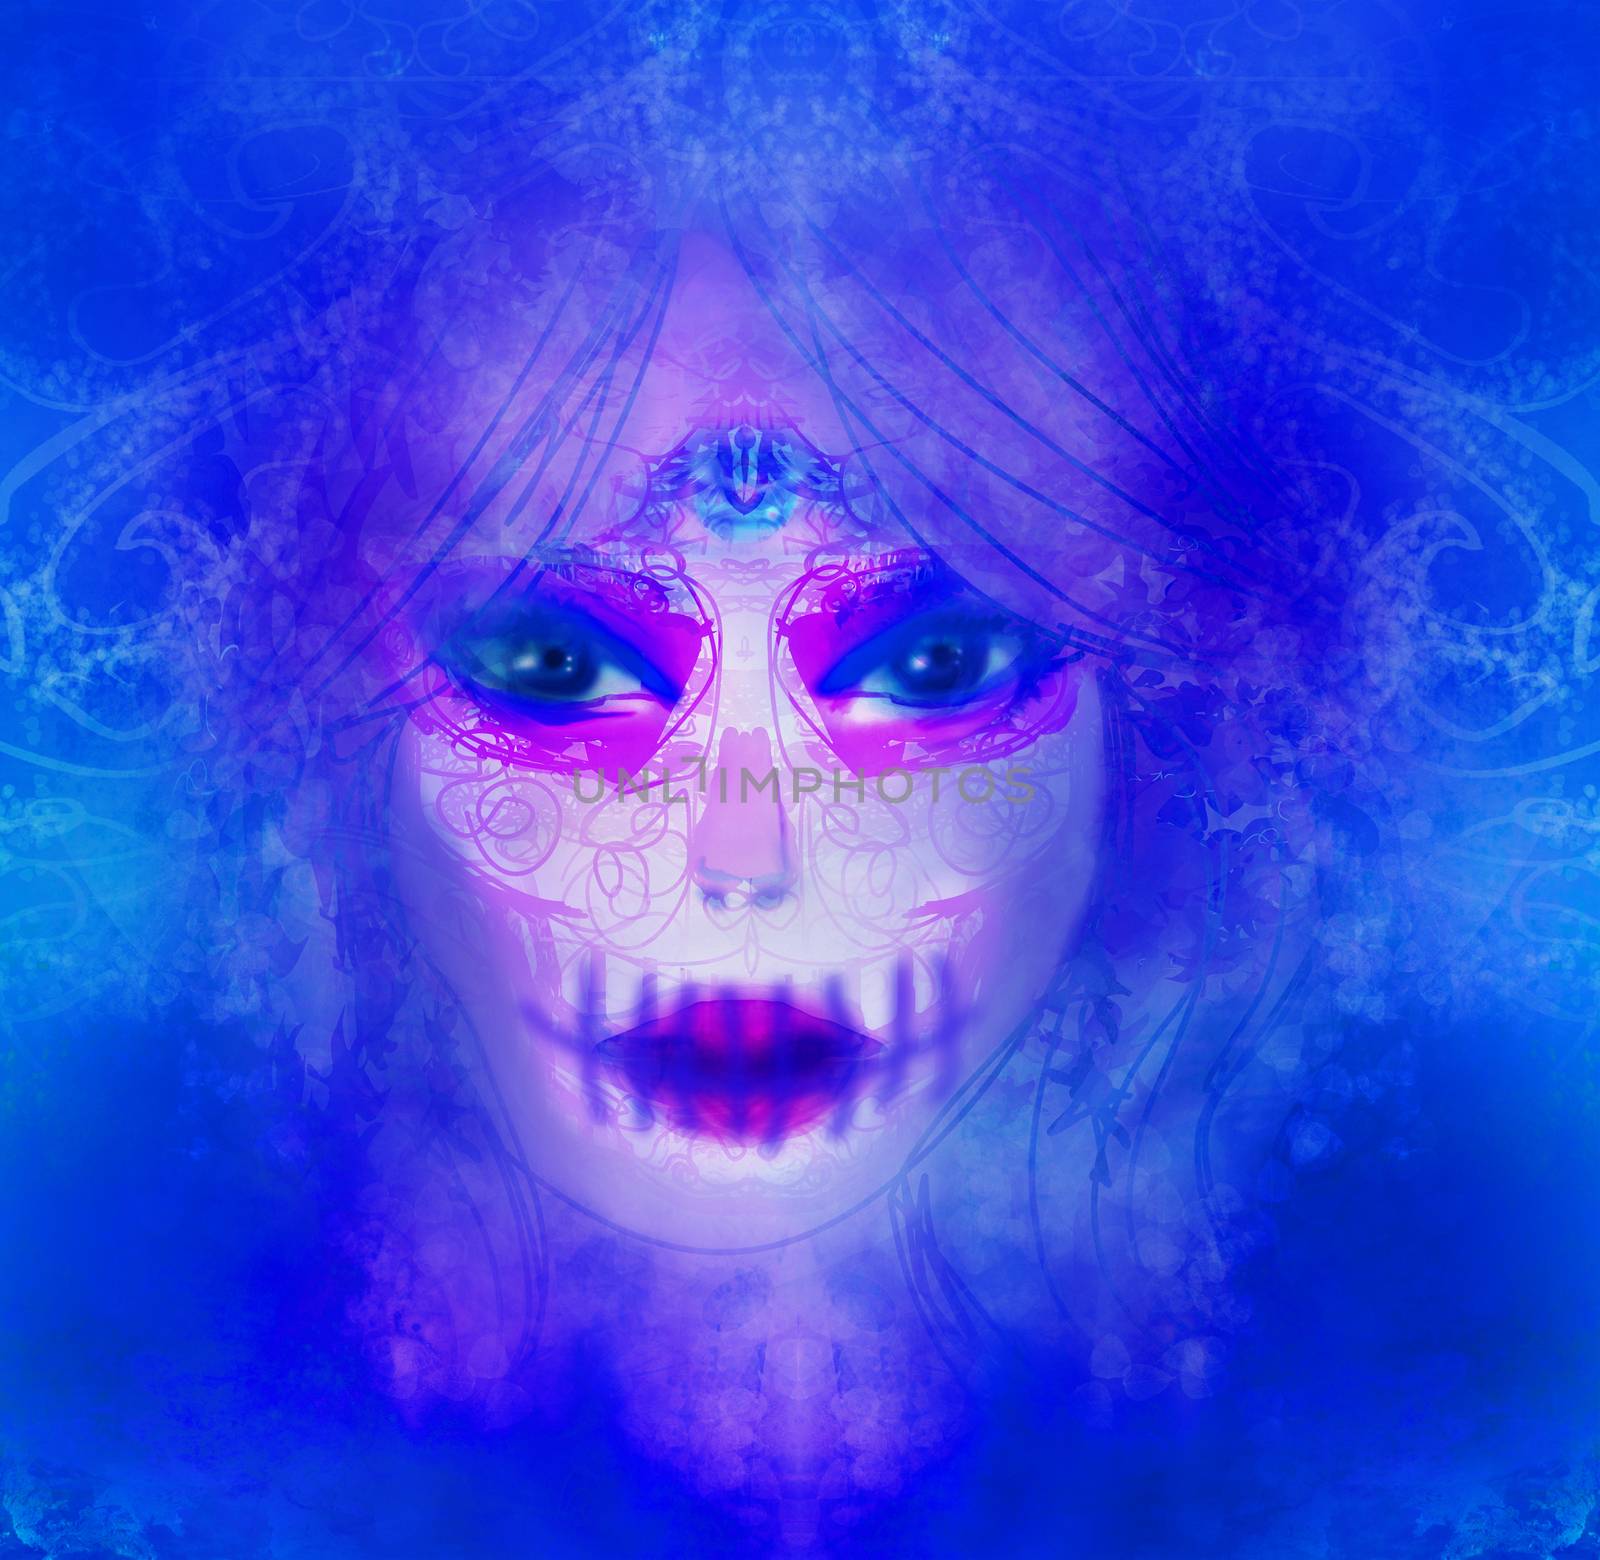 Mexican Sugar Skull girl by JackyBrown